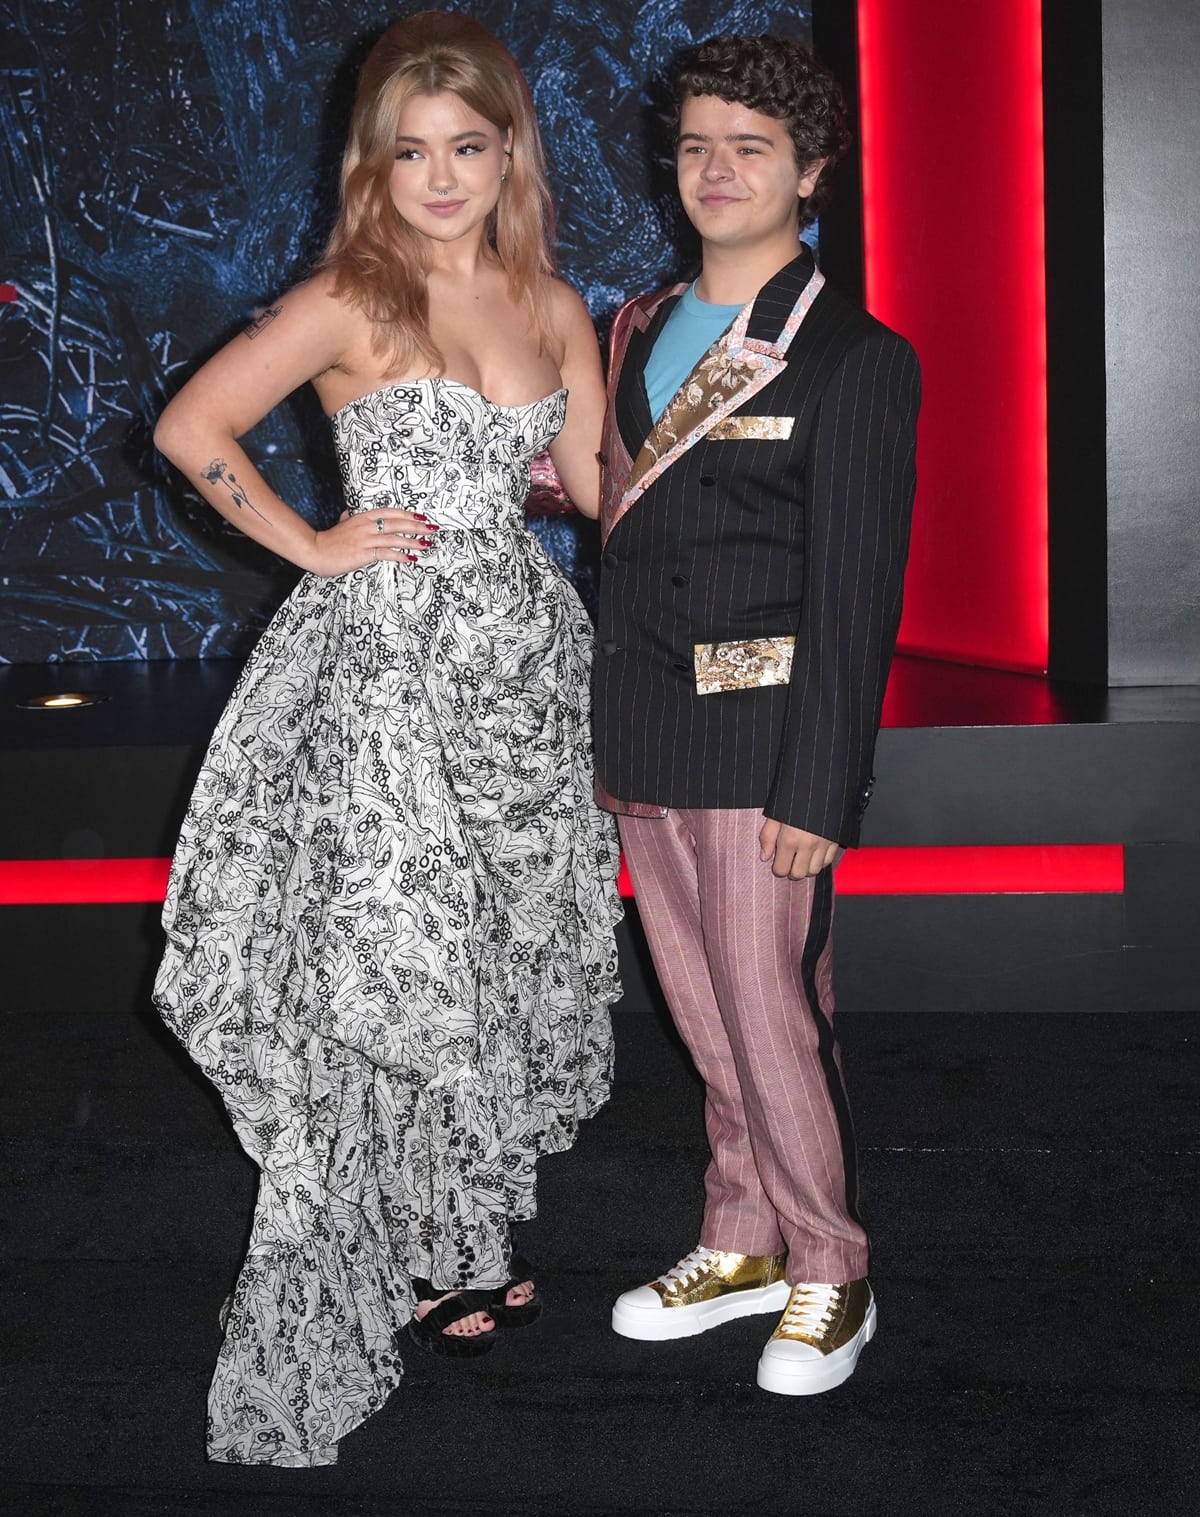 Gaten Matarazzo and Elizabeth Yu attend Netflix's "Stranger Things" season 4 premiere